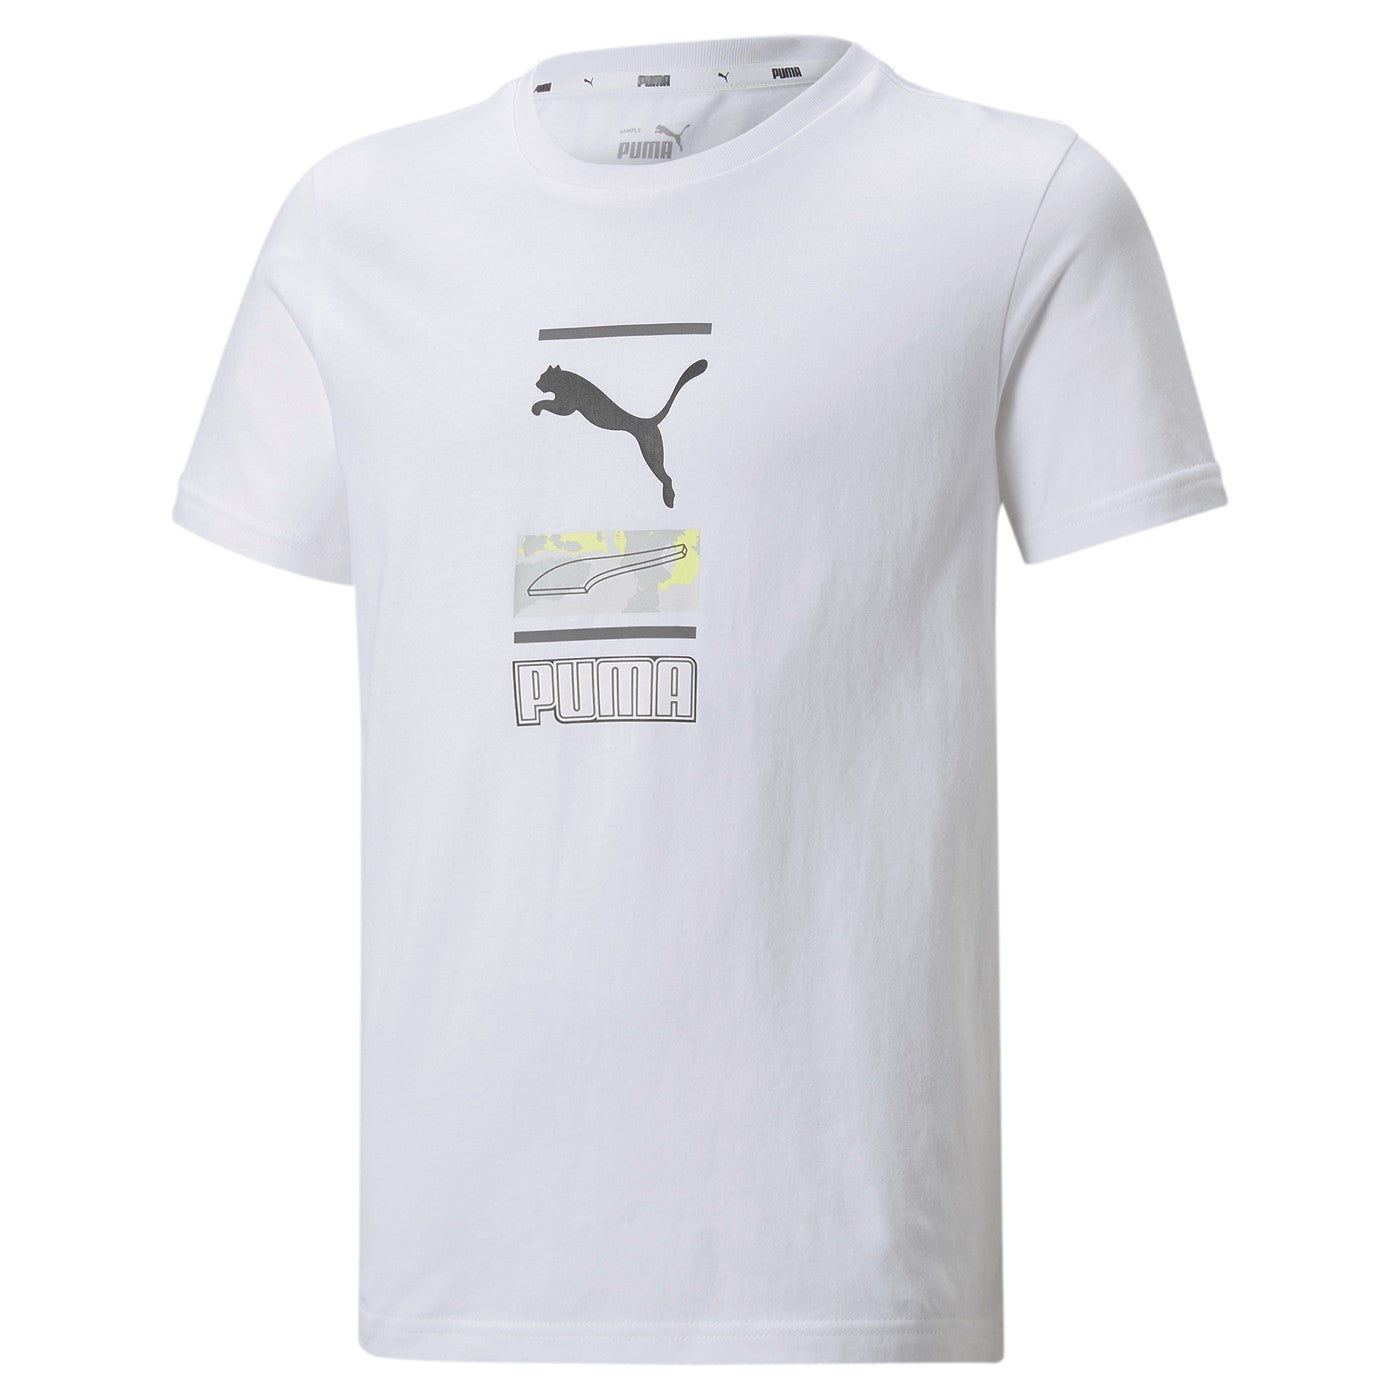 Puma Alpha Graphic Tee B 847281 02 white